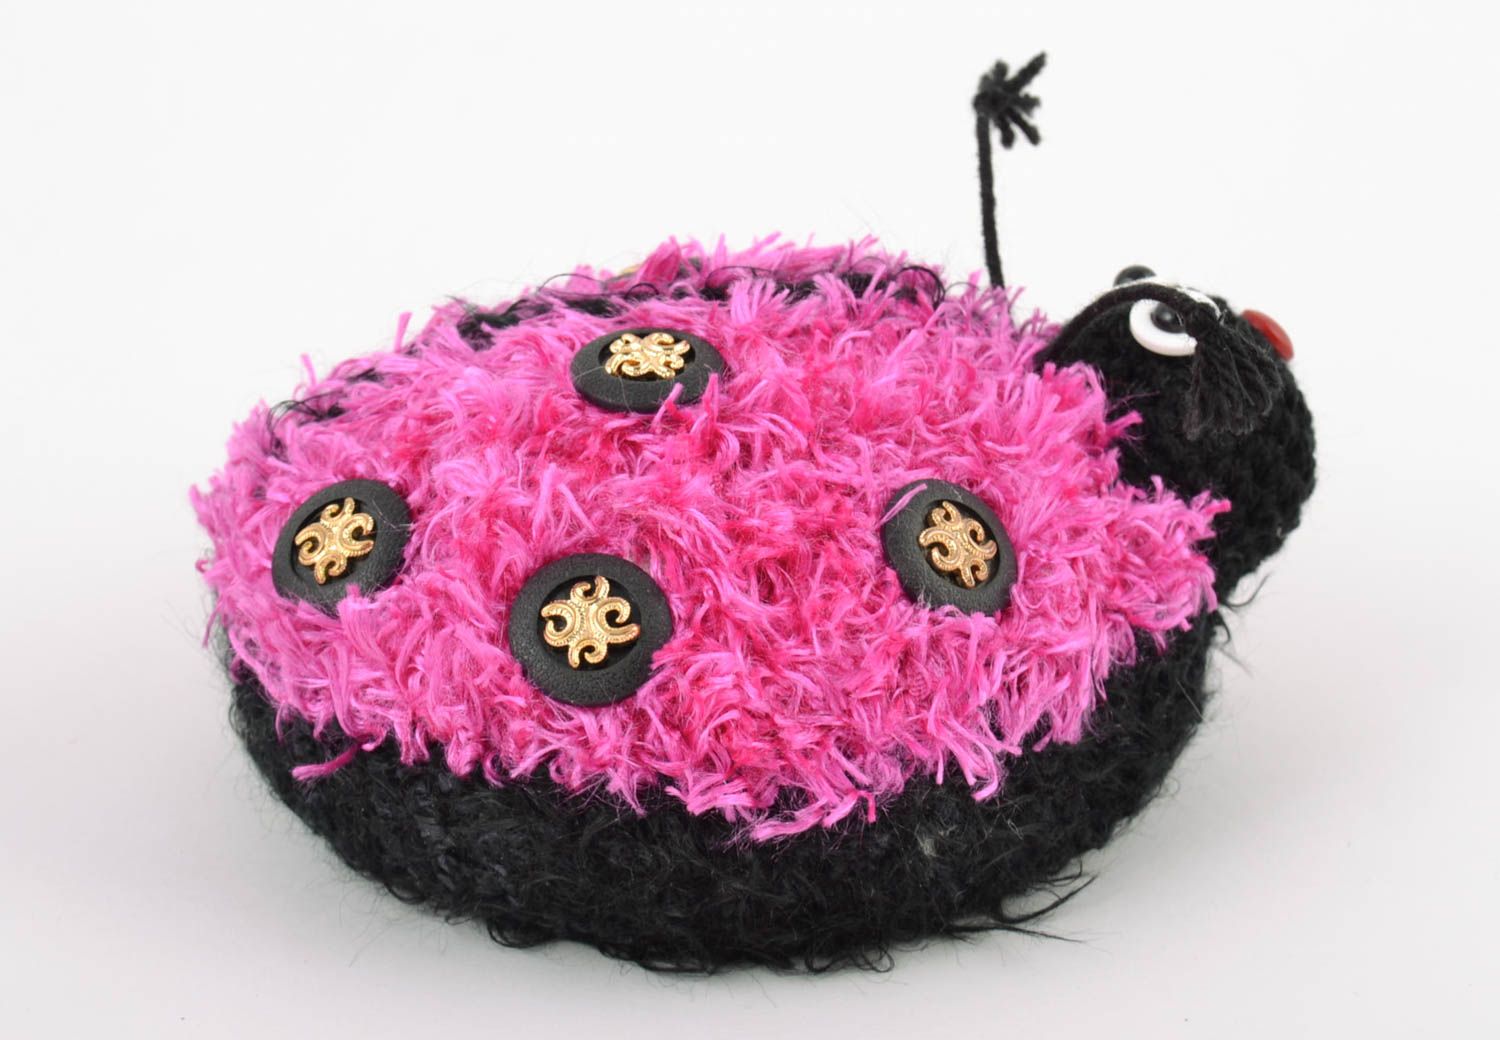 Handmade pink crochet soft toy created using amigurumi technique in the shape of ladybug photo 4